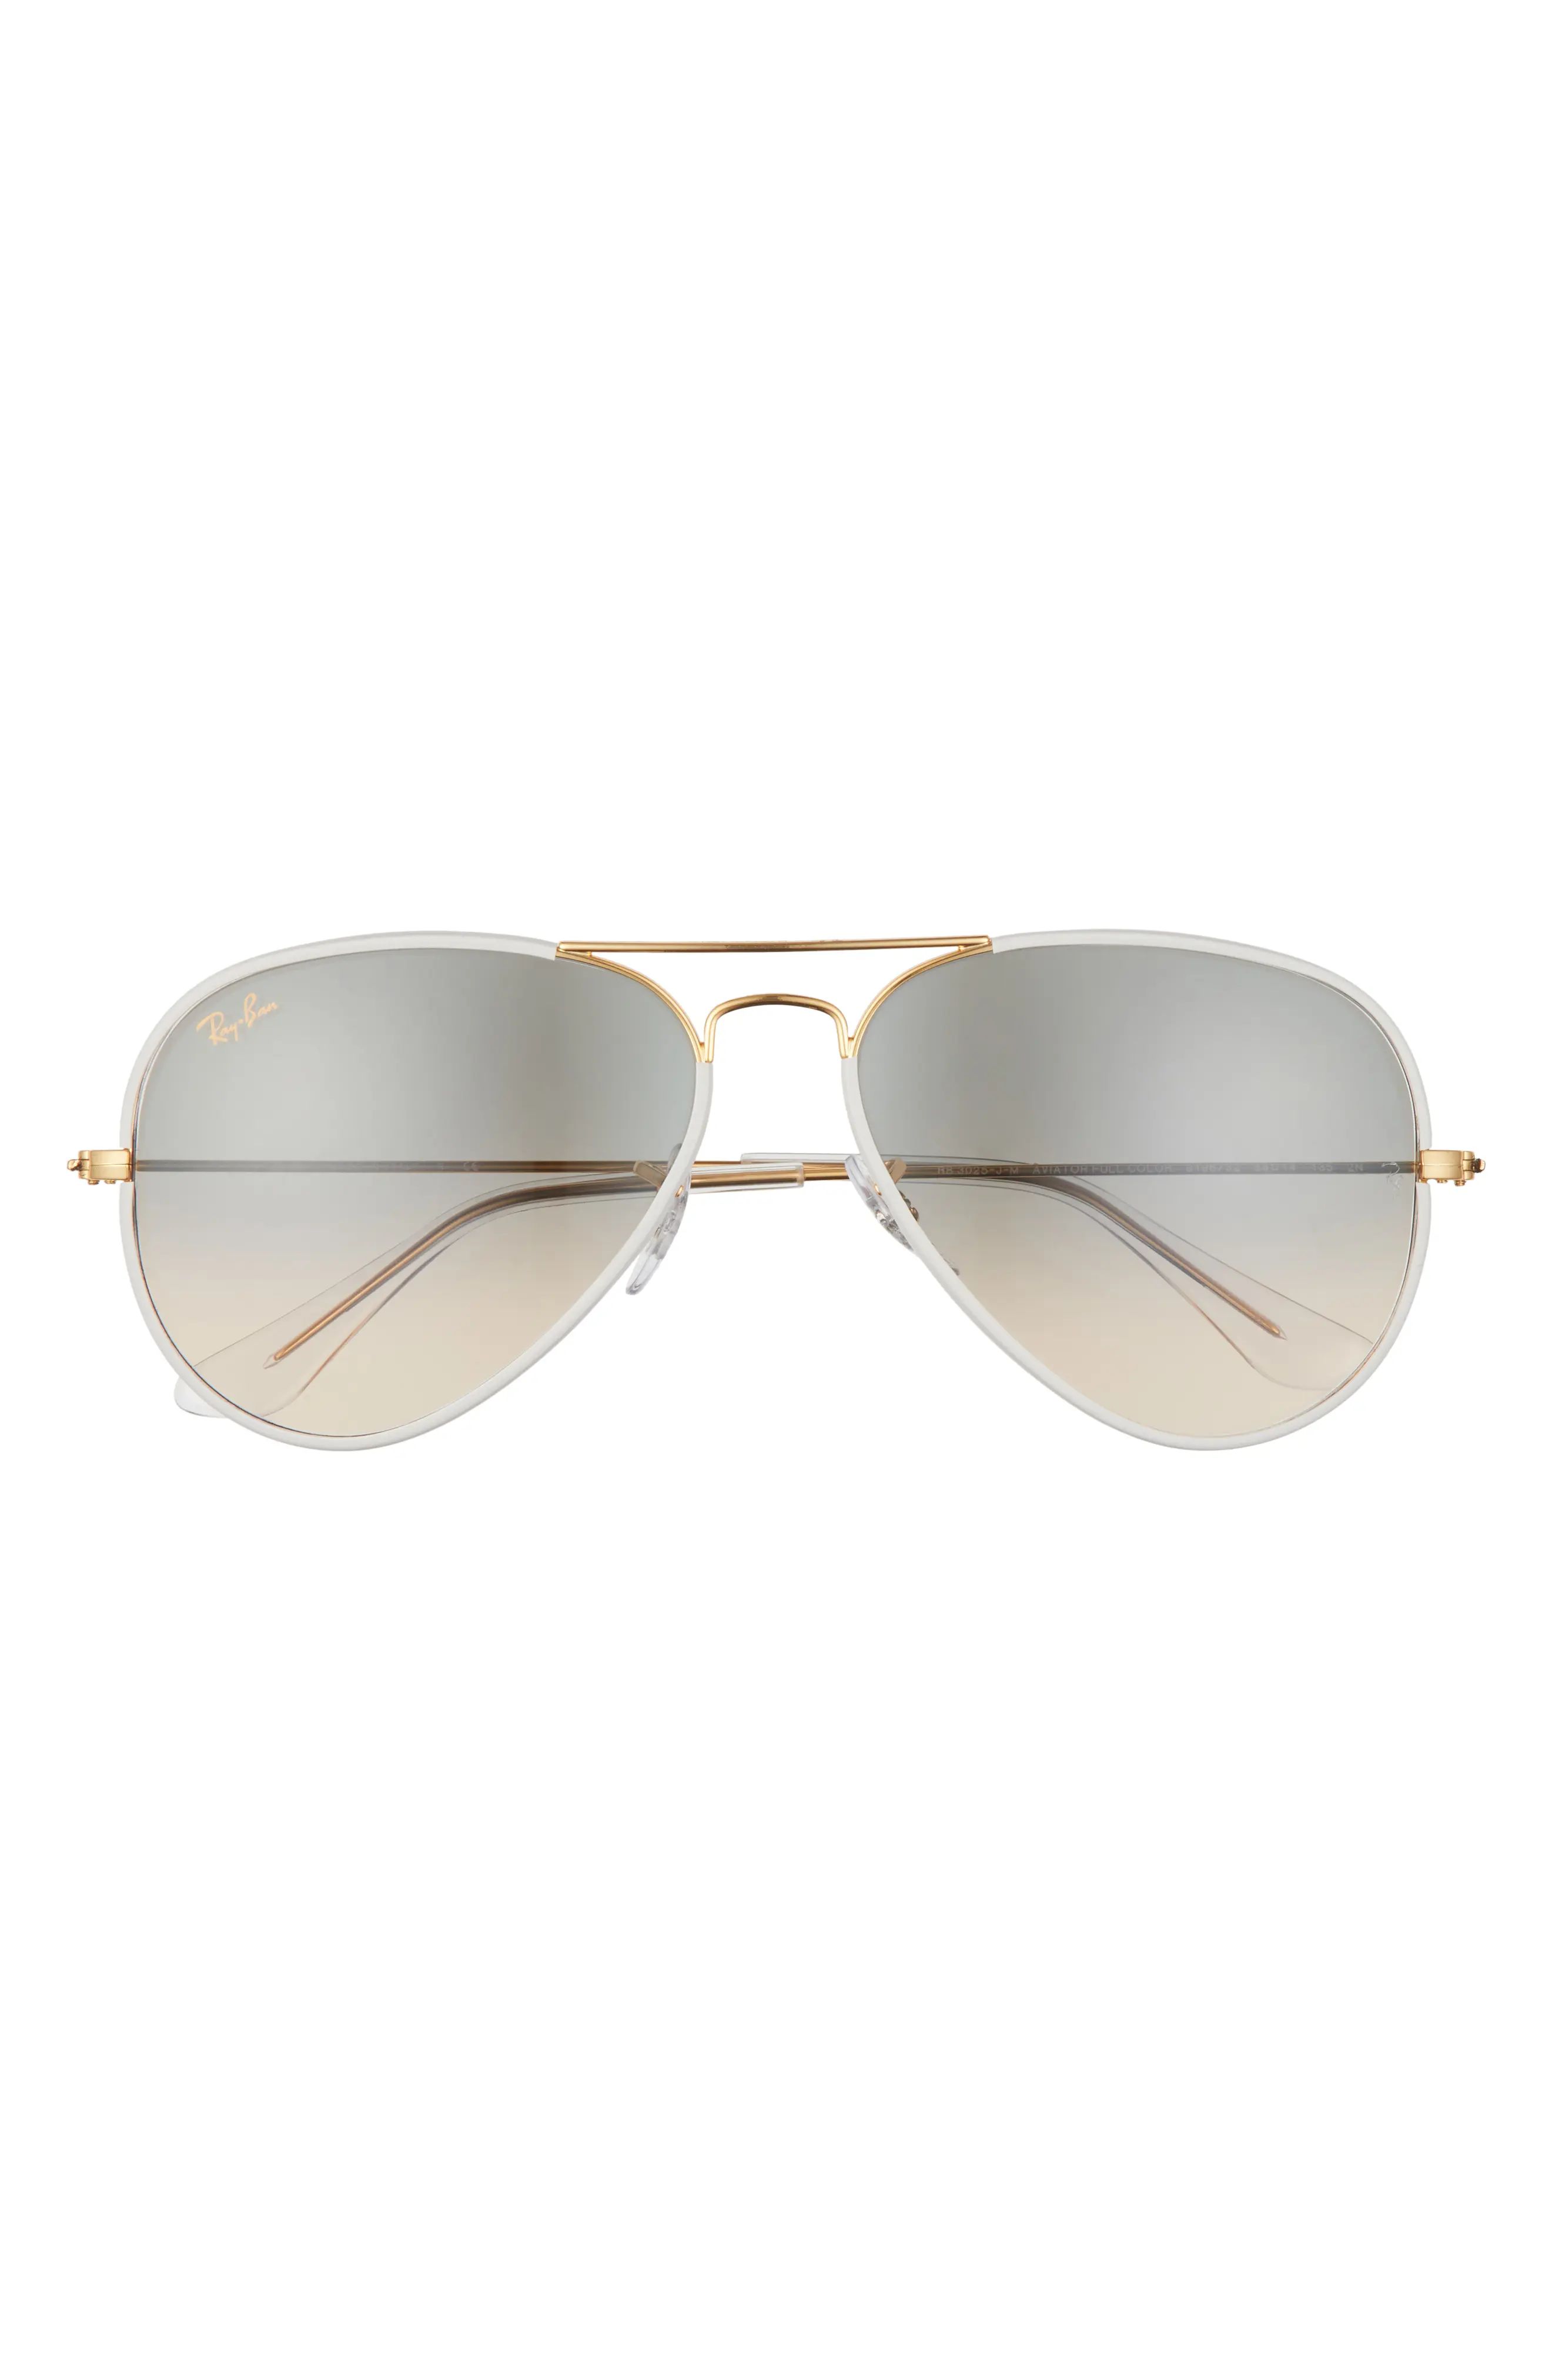 Women's Ray-Ban Aviator 58mm Sunglasses - Grey On Gold / Grey Gradient | Nordstrom